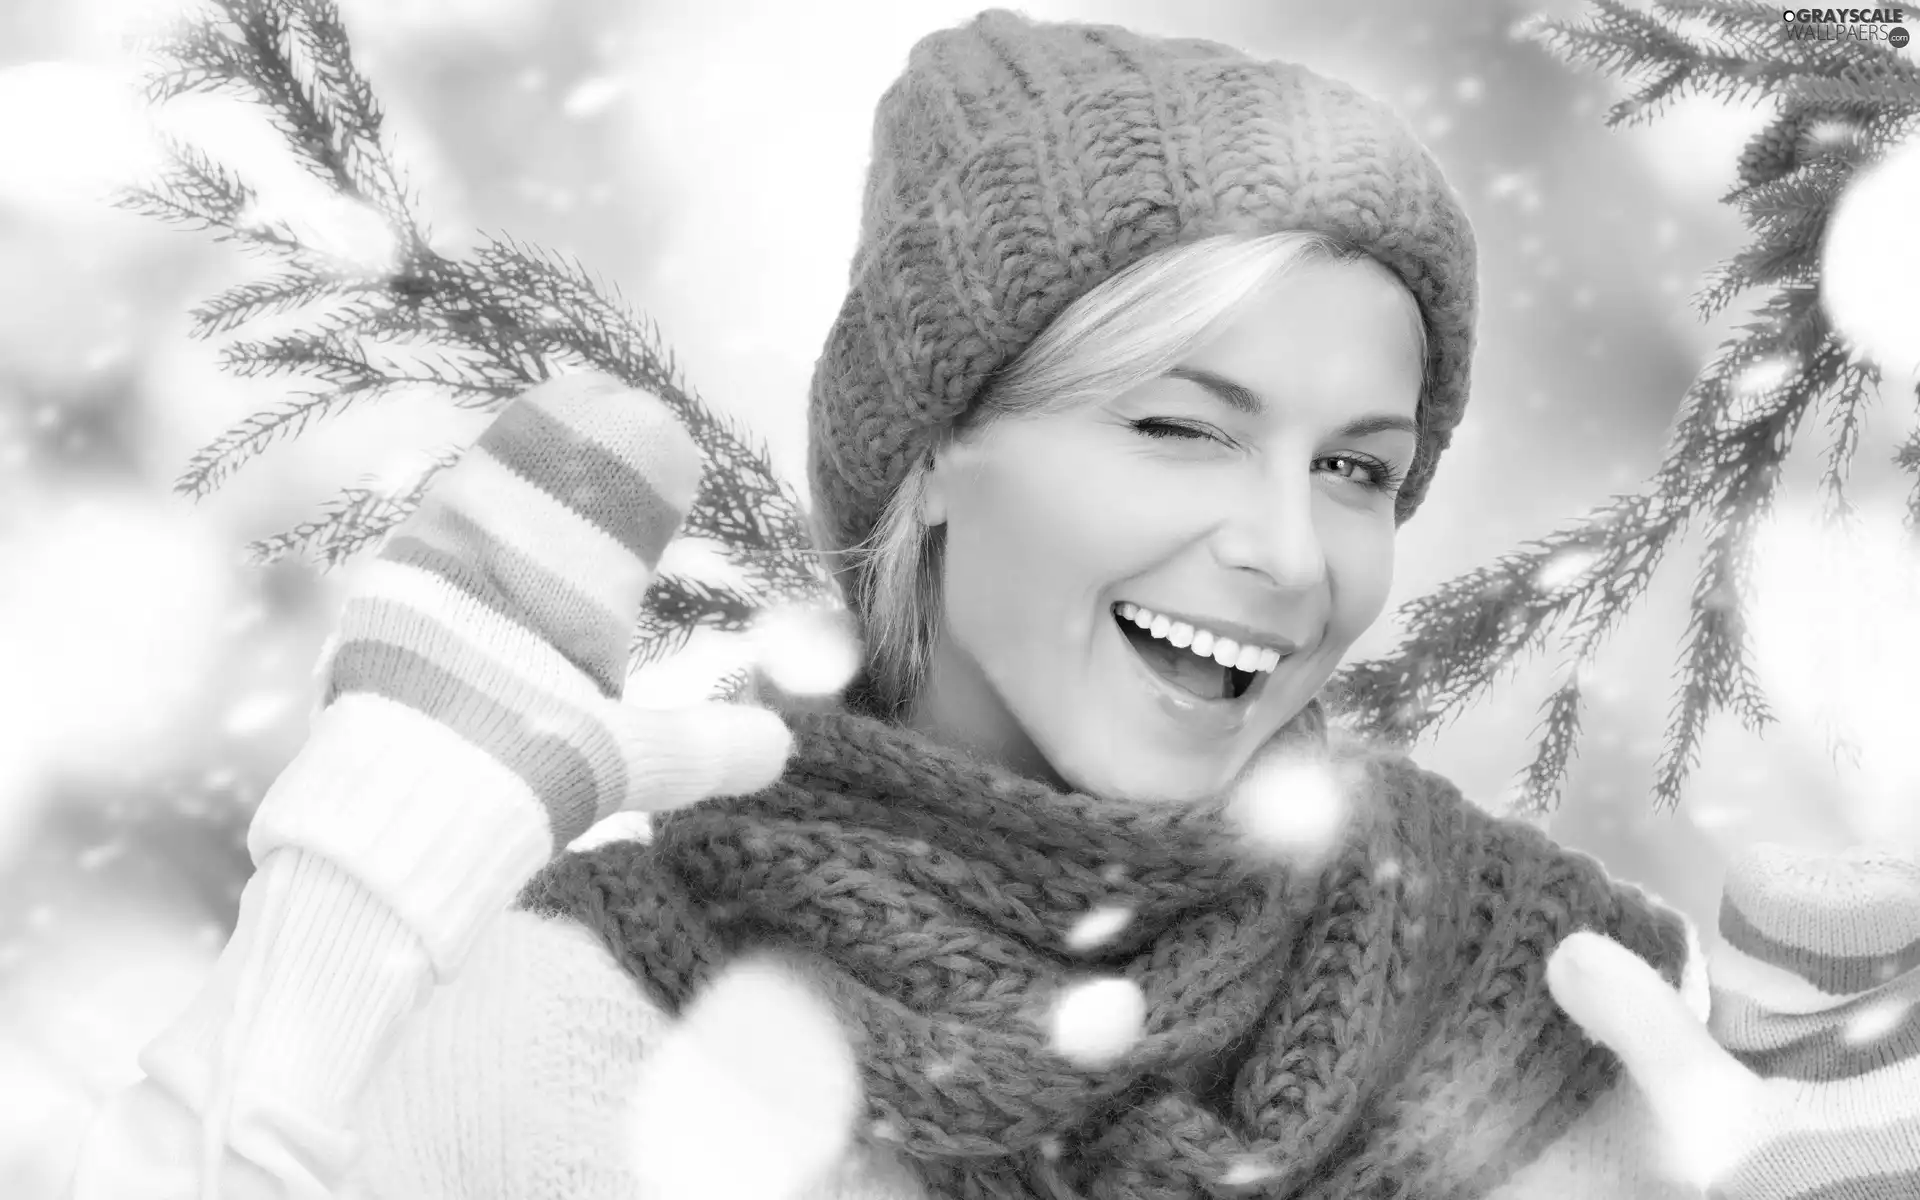 Hat, smiling, snow, winter, branch pics, girl